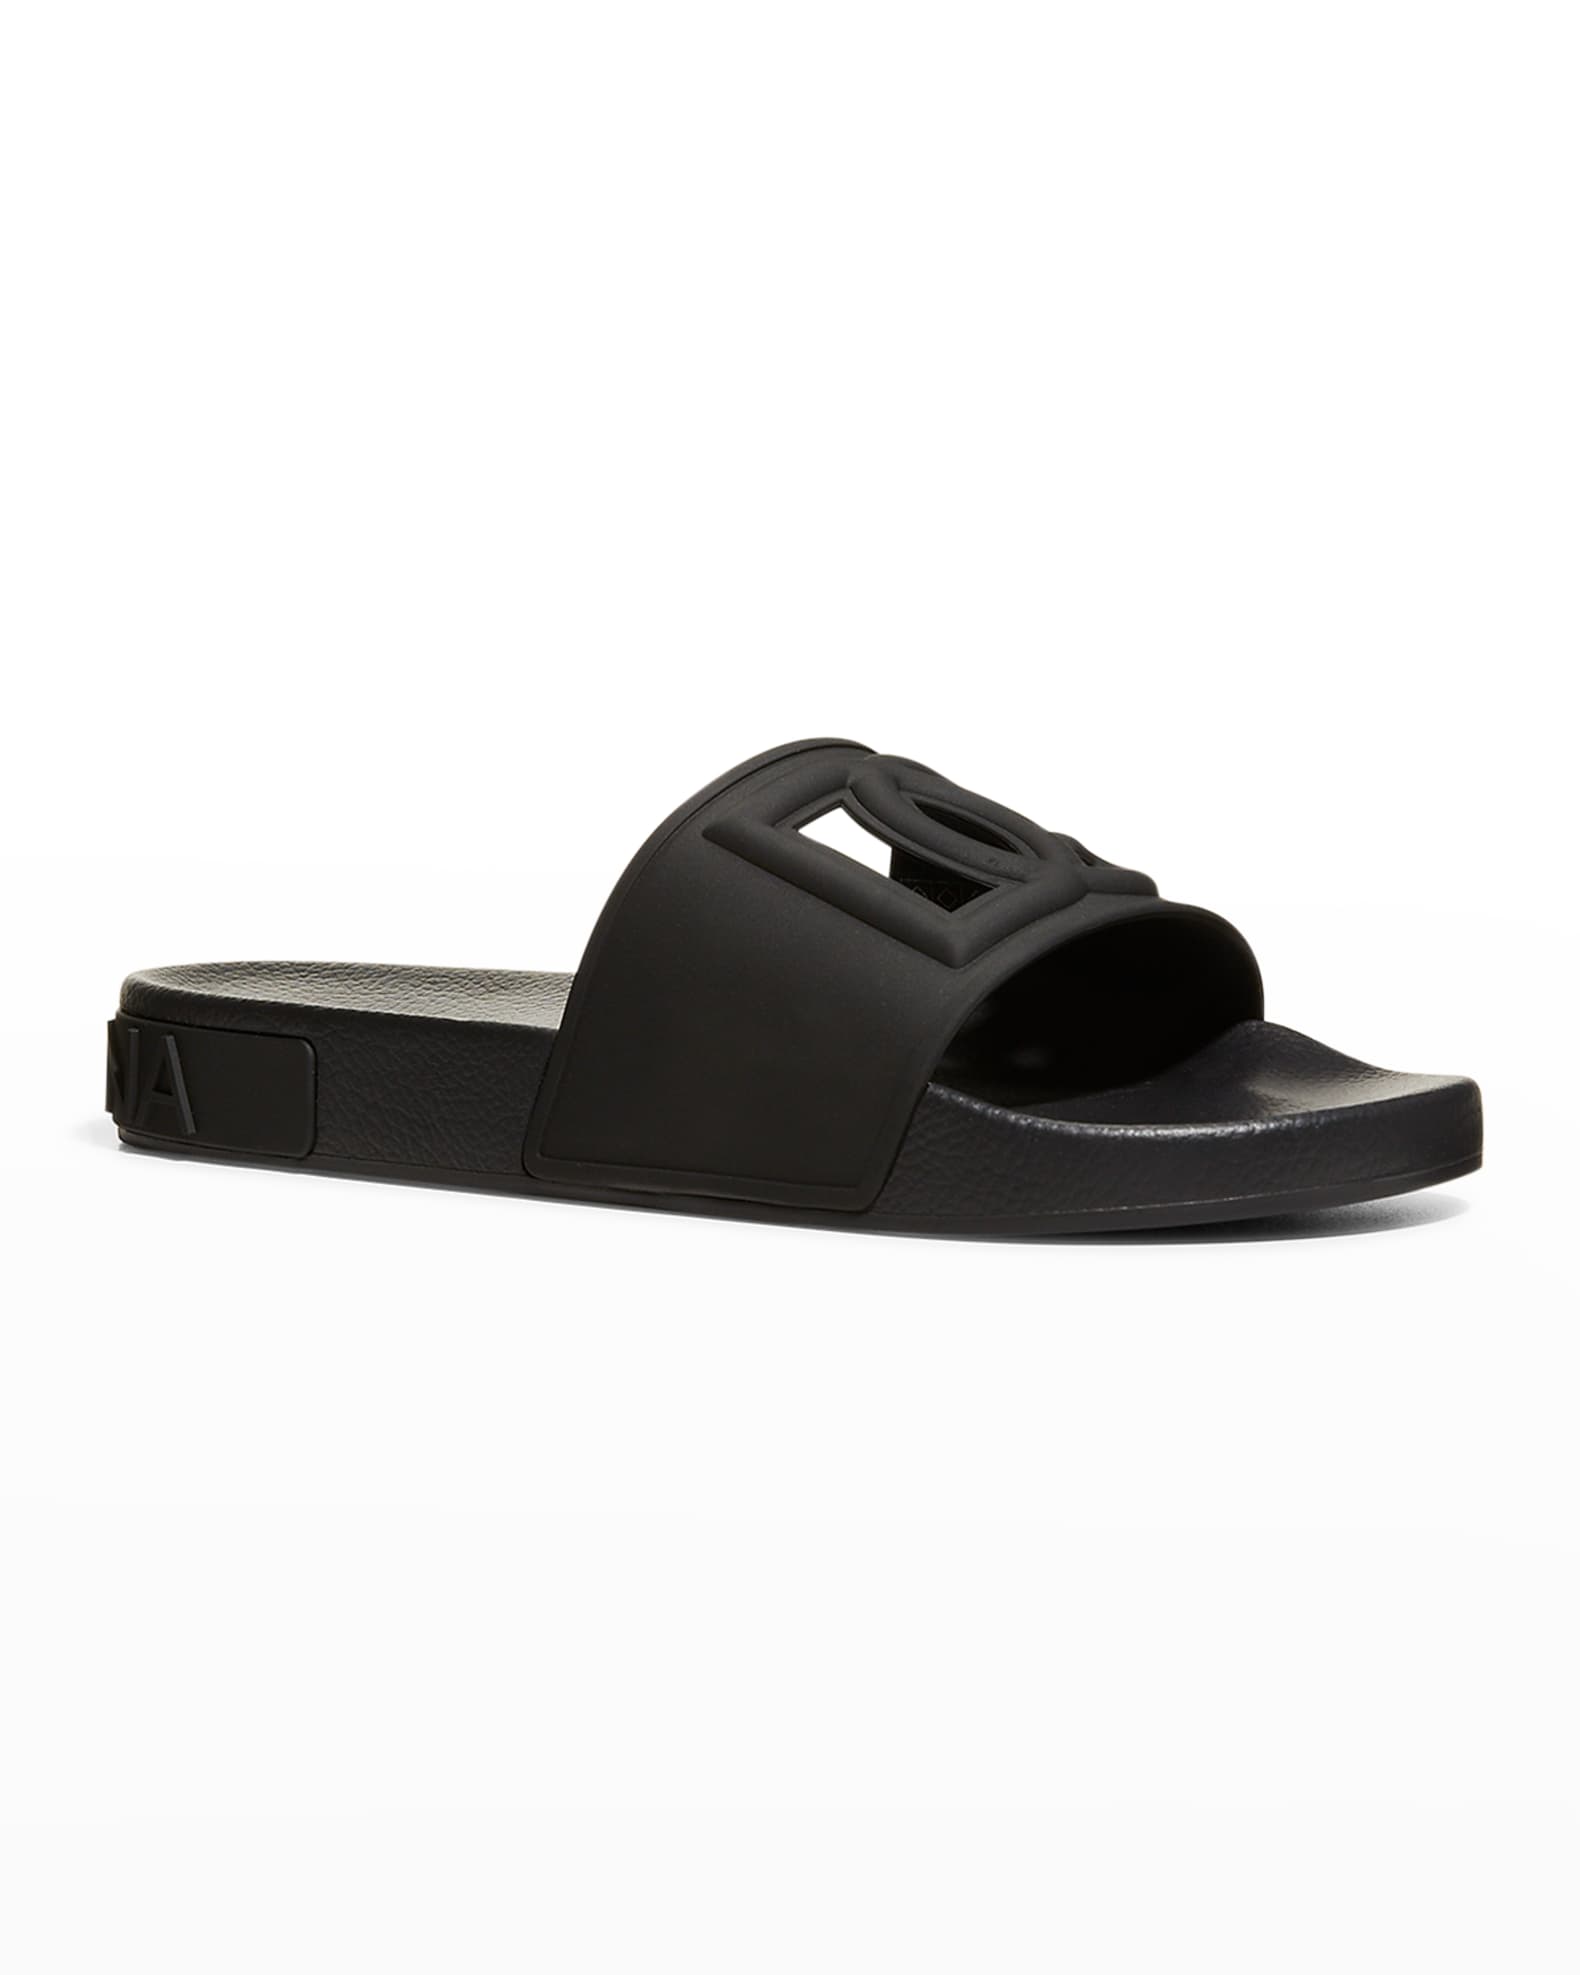 Dolce&Gabbana DG Cutout Pool Slide Sandals | Neiman Marcus